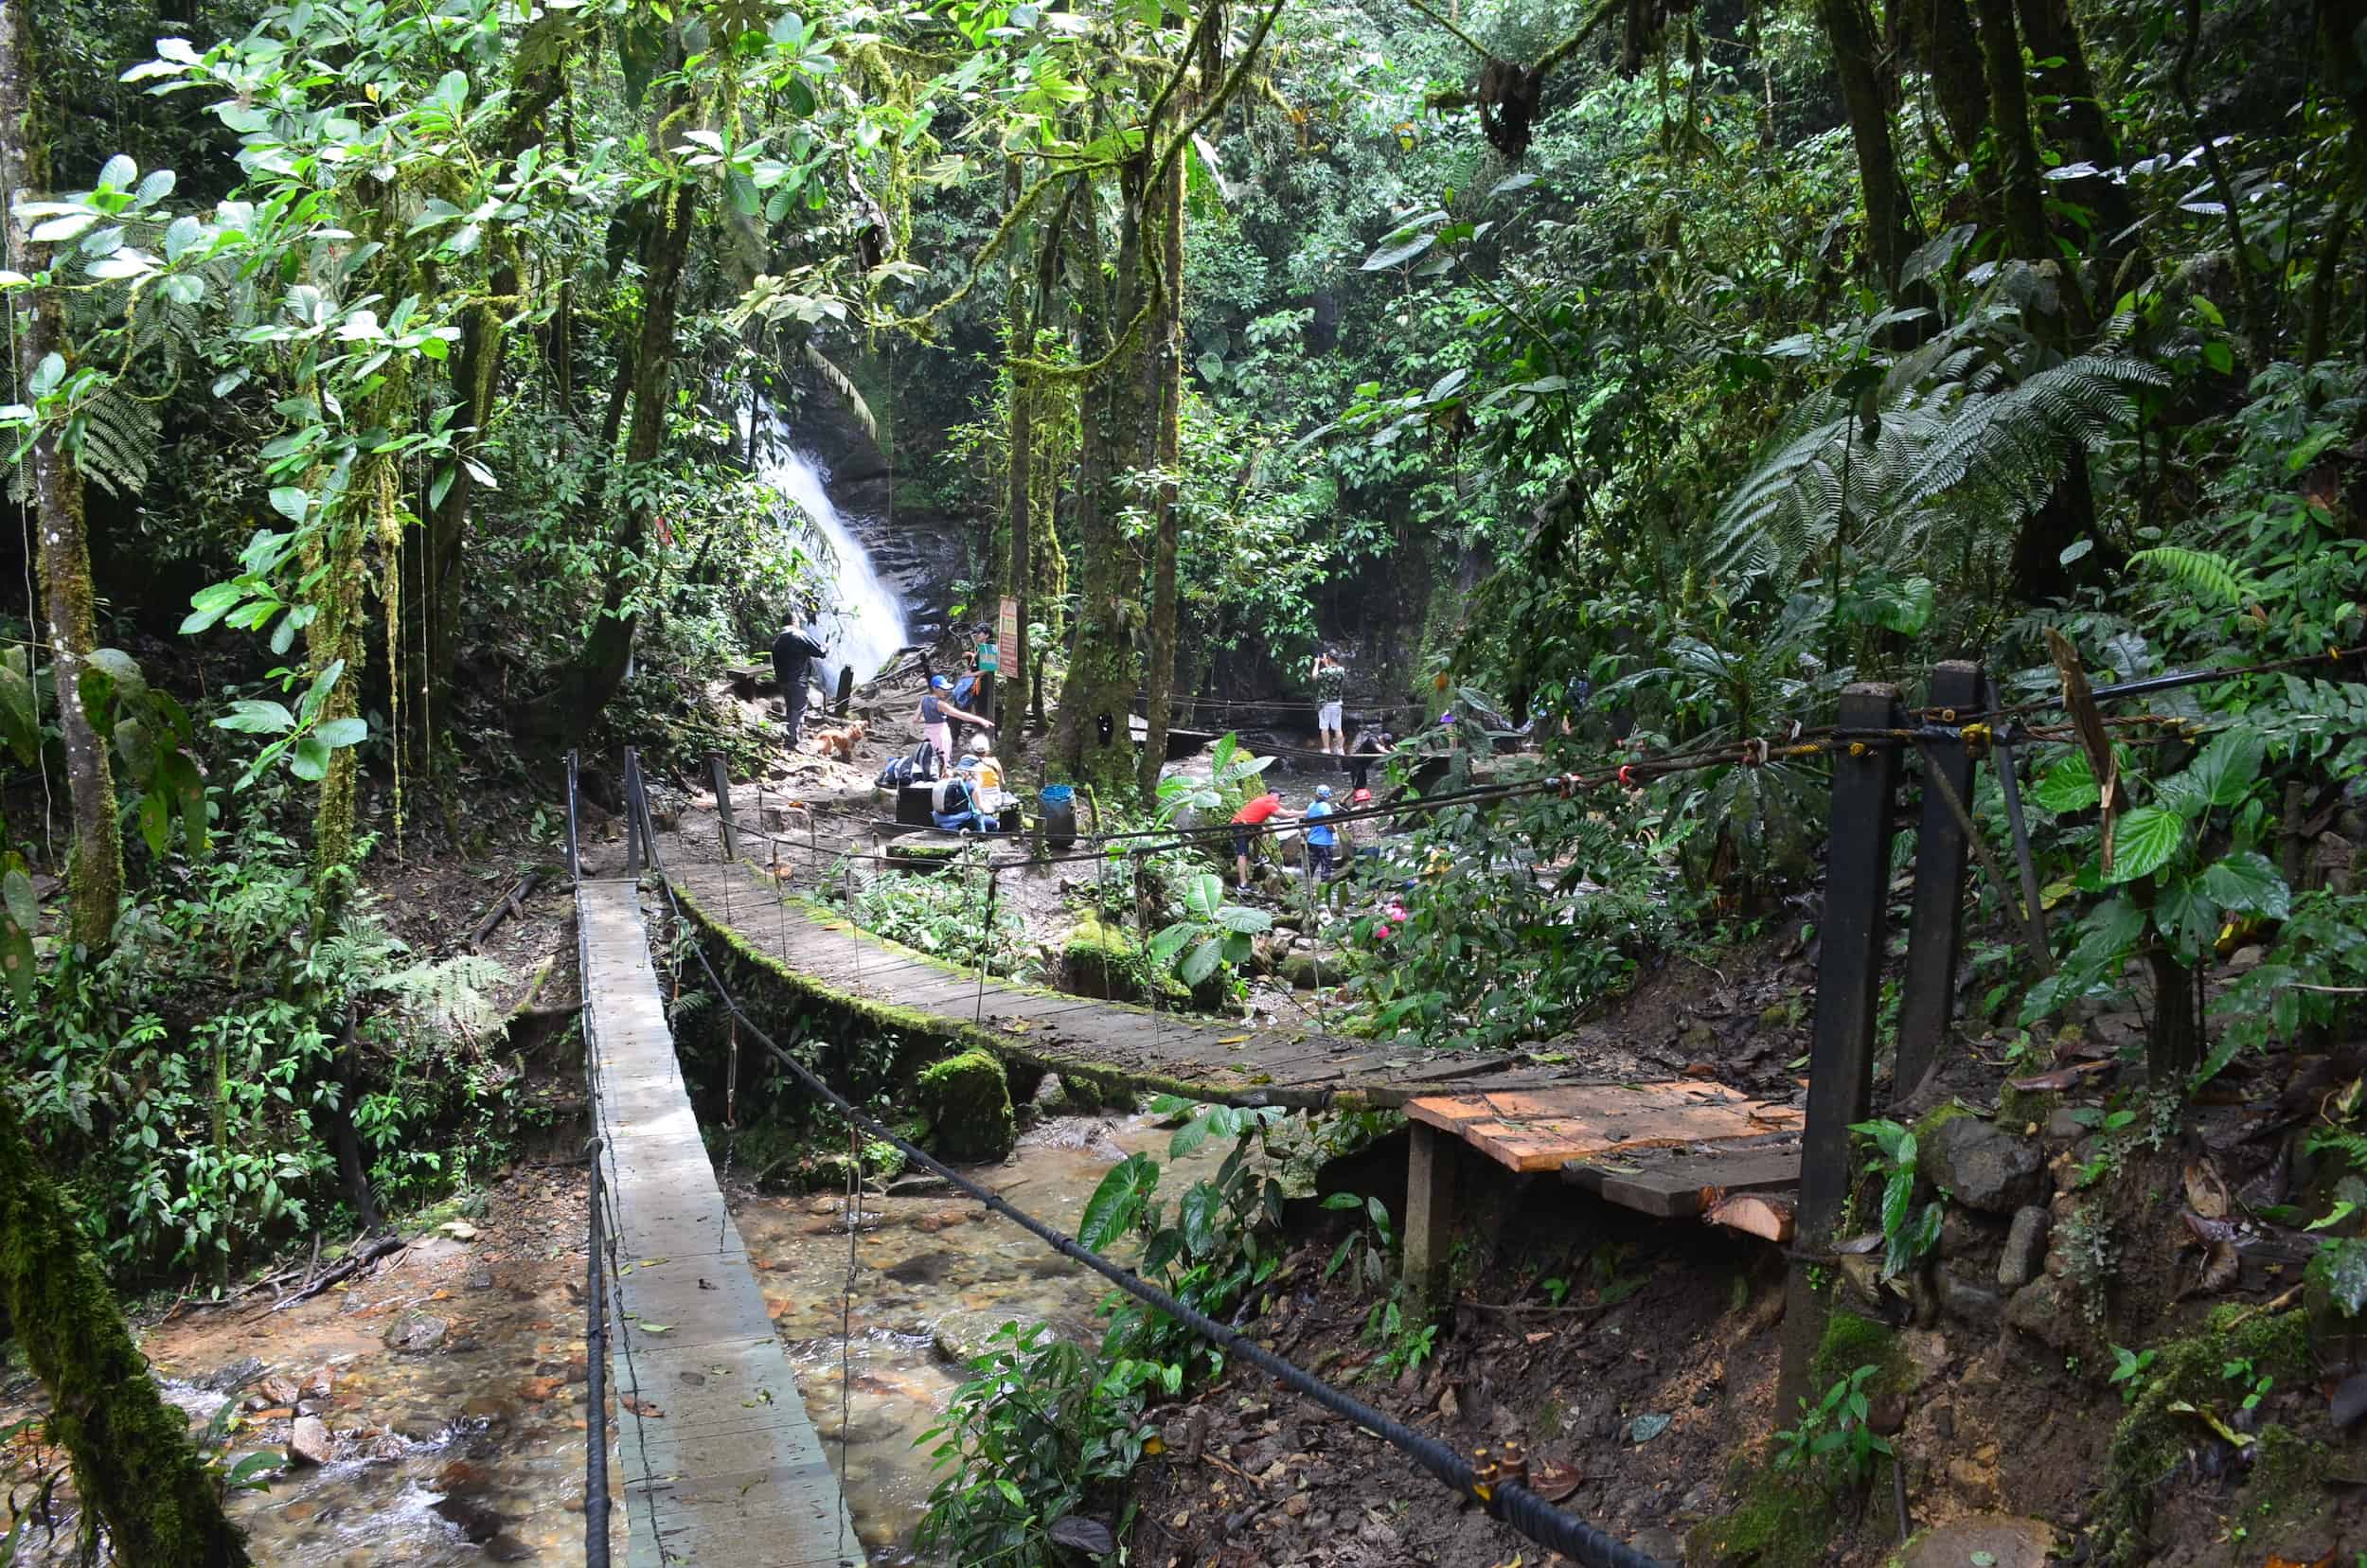 Bridges to the waterfall at Santa Rita Nature Reserve in Boquía, Salento, Quindío, Colombia